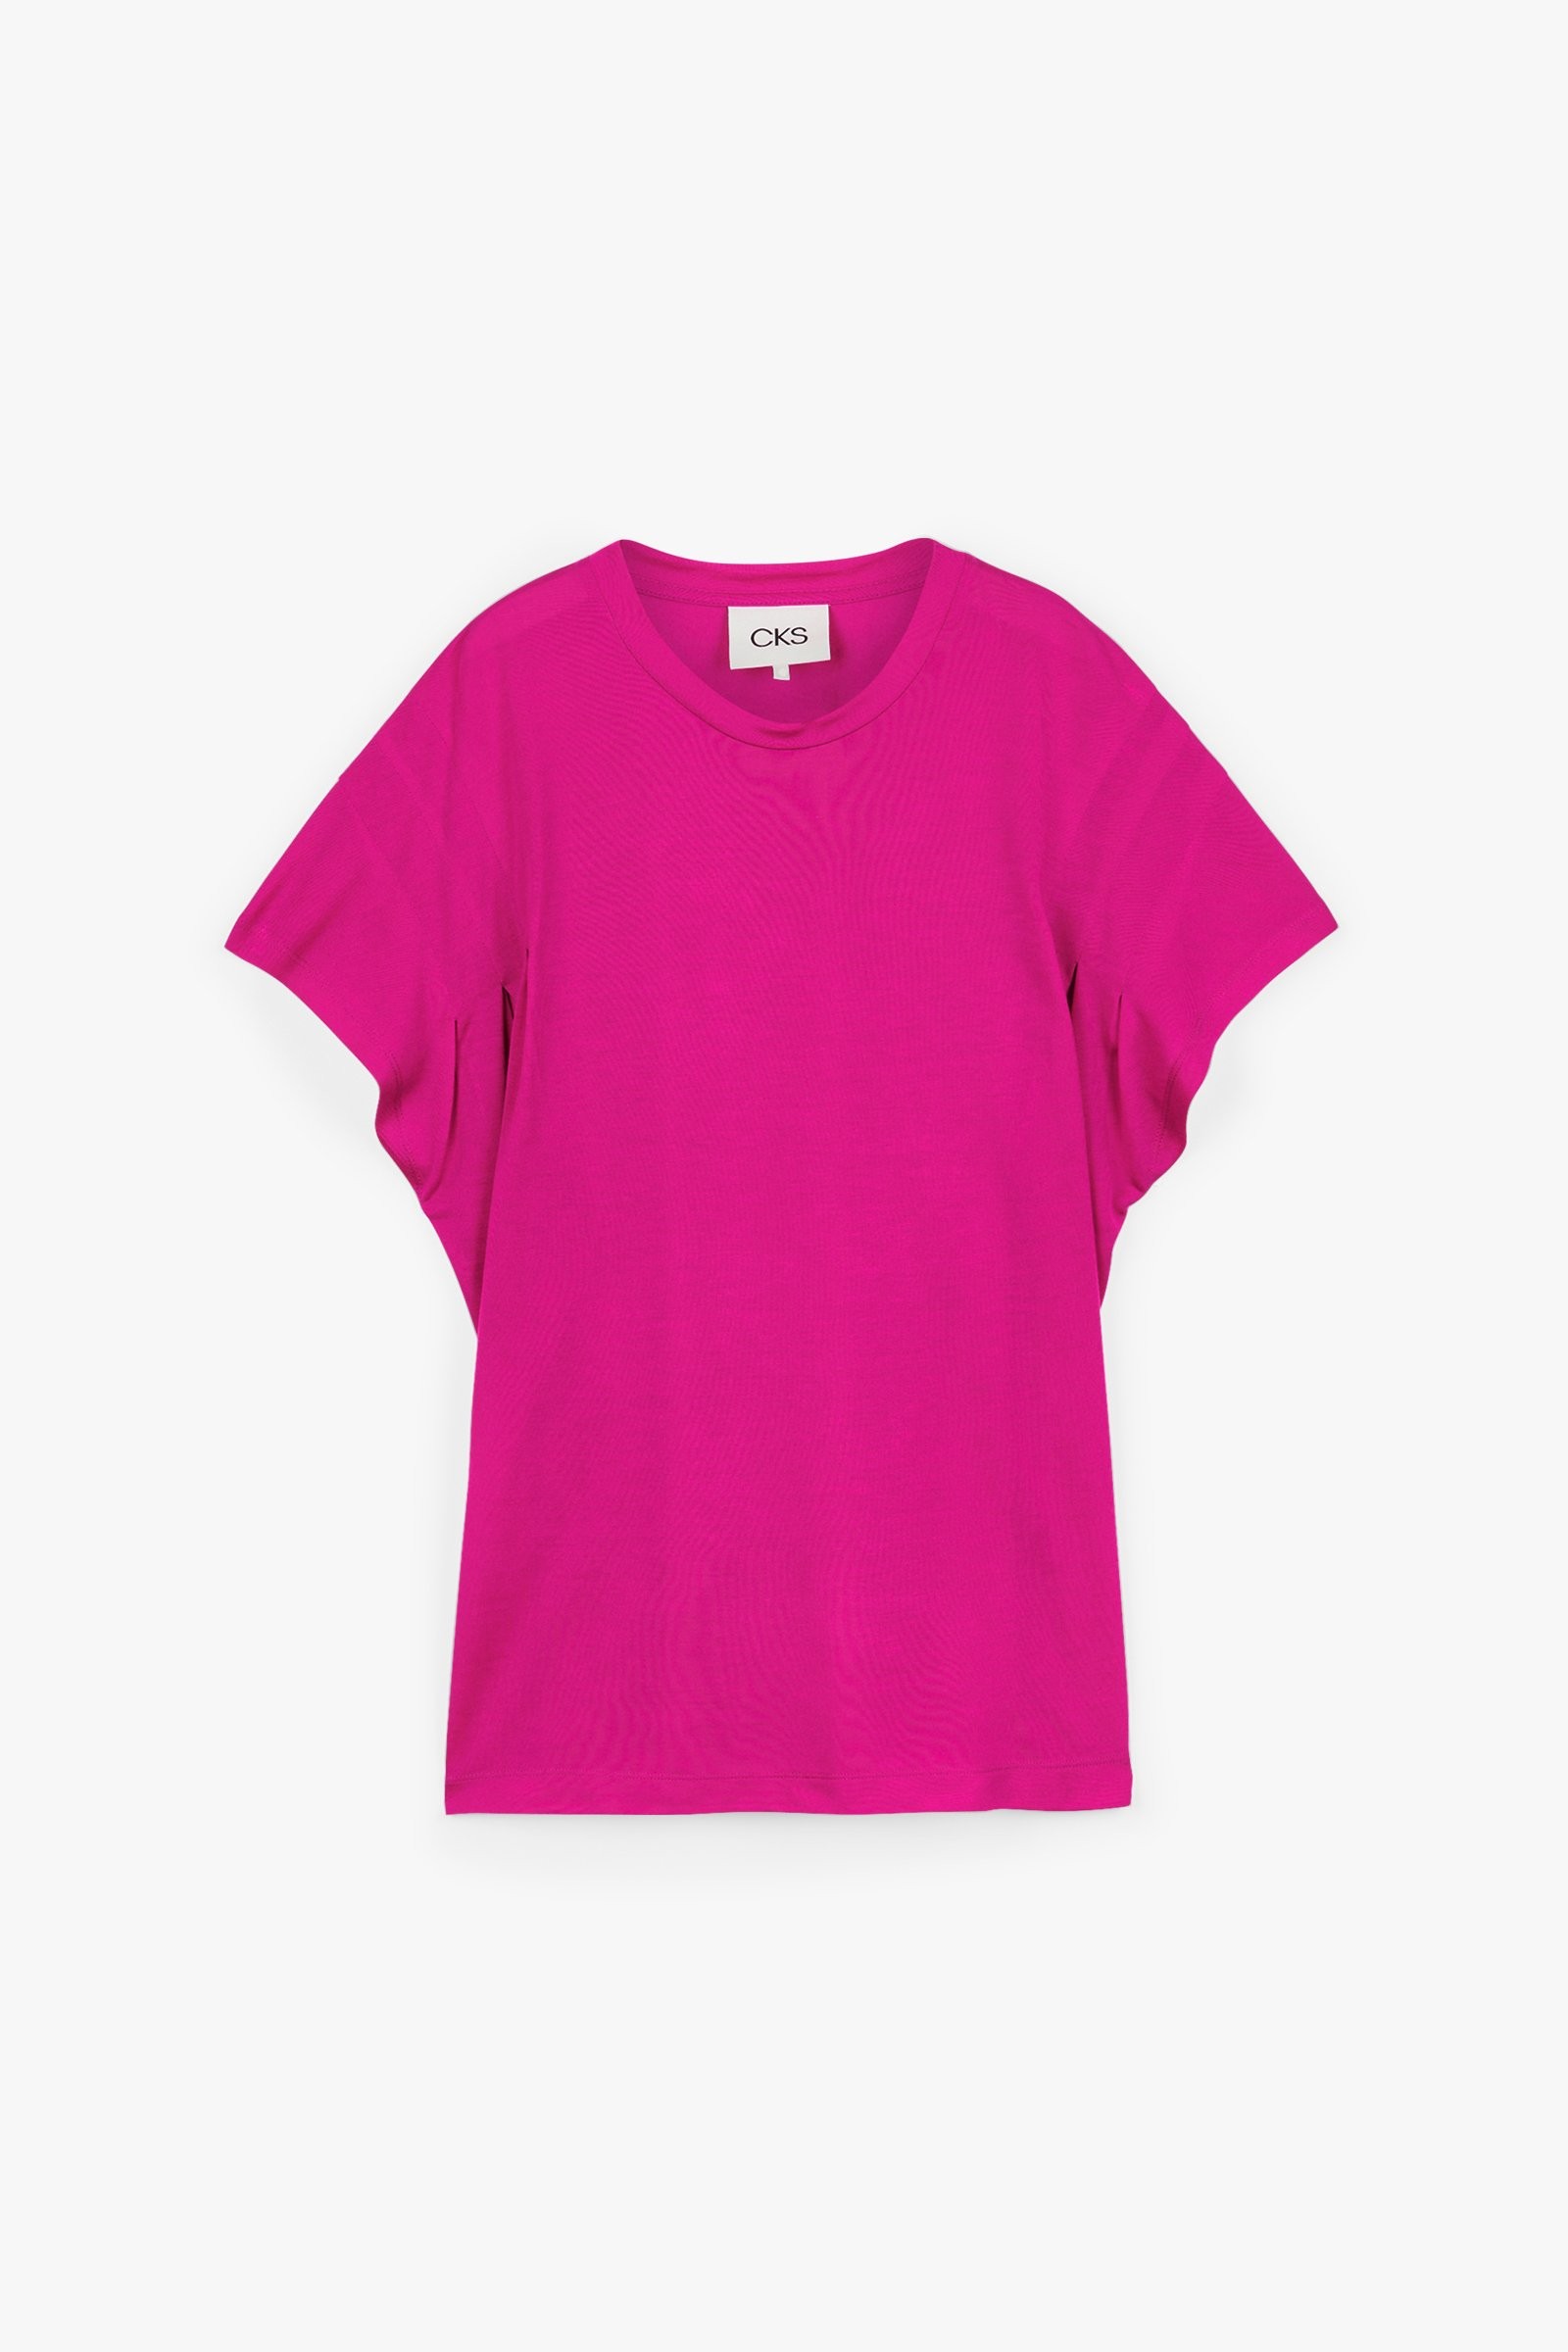 CKS Dames - JAZZ - T-Shirt Kurzarm - Rosa